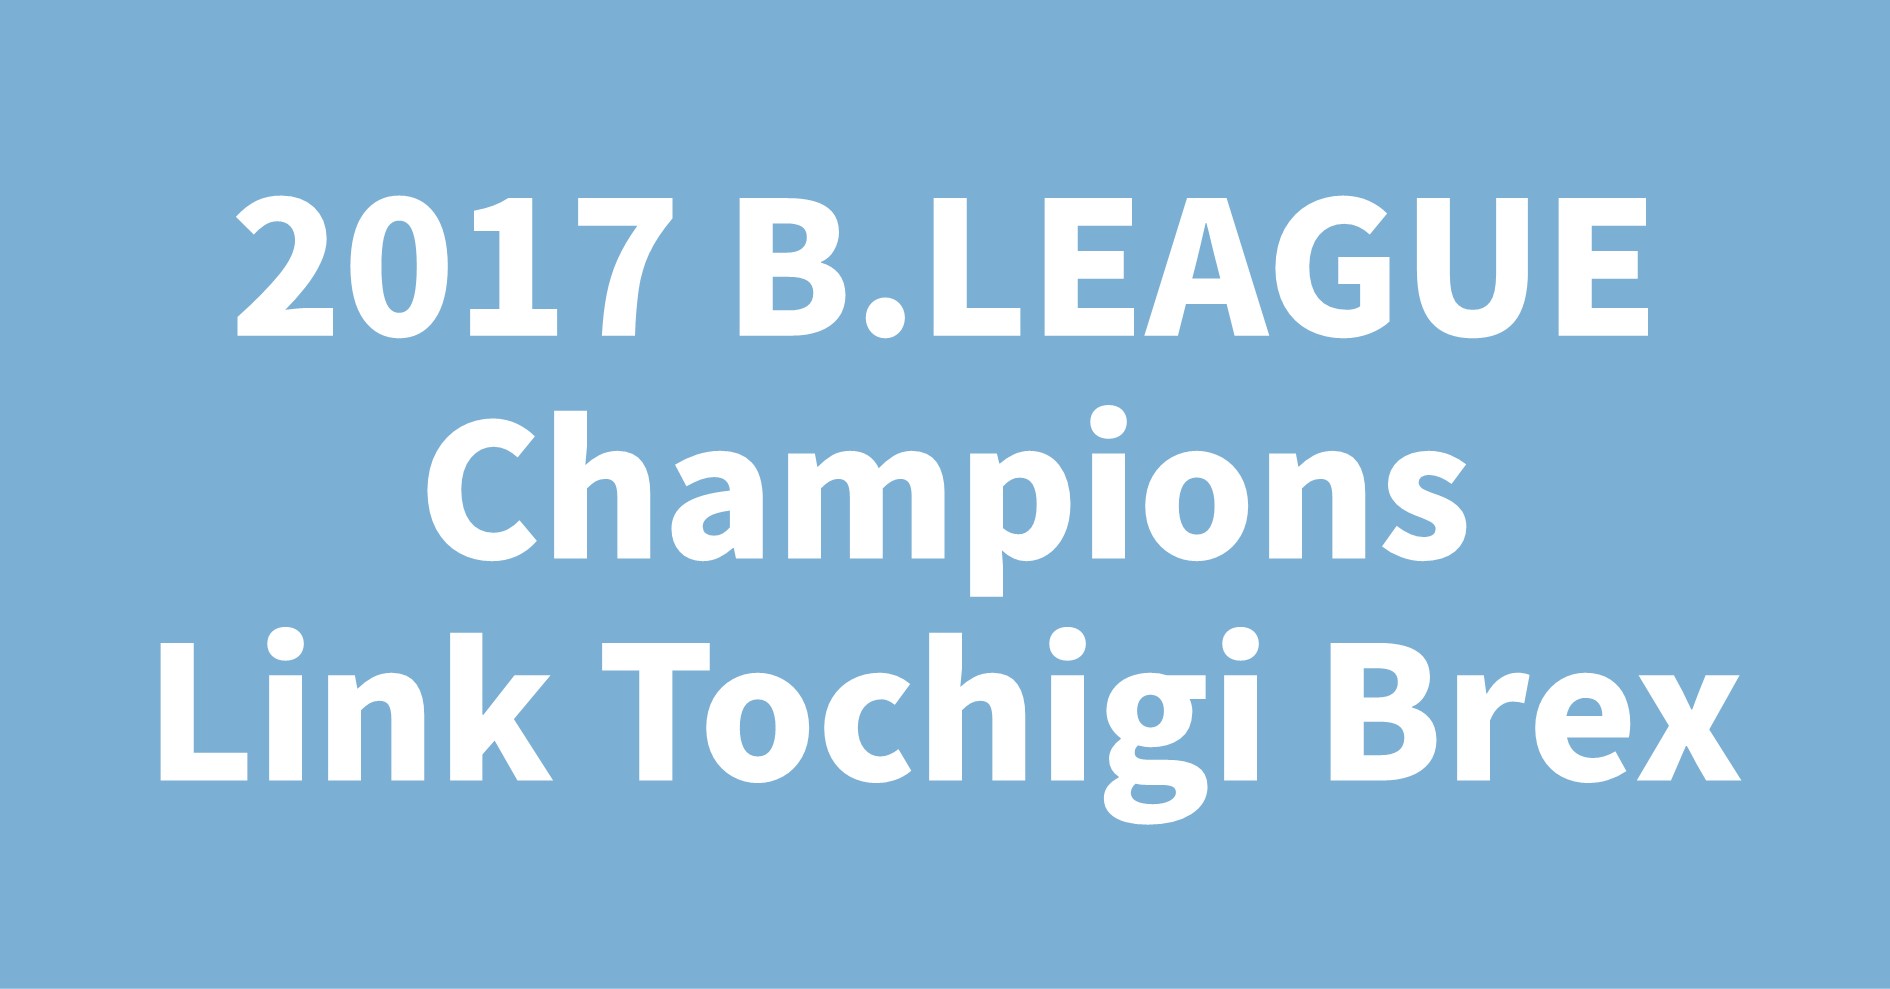 2017 B.LEAGUE Champions Link Tochigi Brex